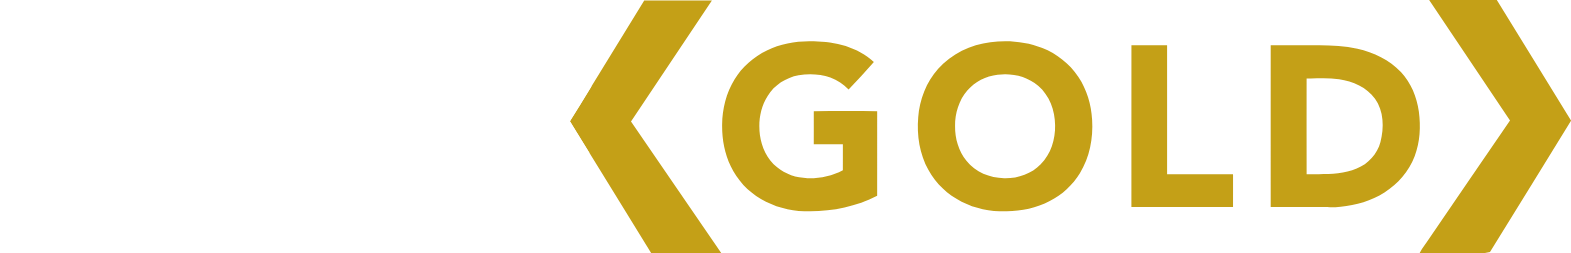 Tanzanian Gold Corporation logo large for dark backgrounds (transparent PNG)